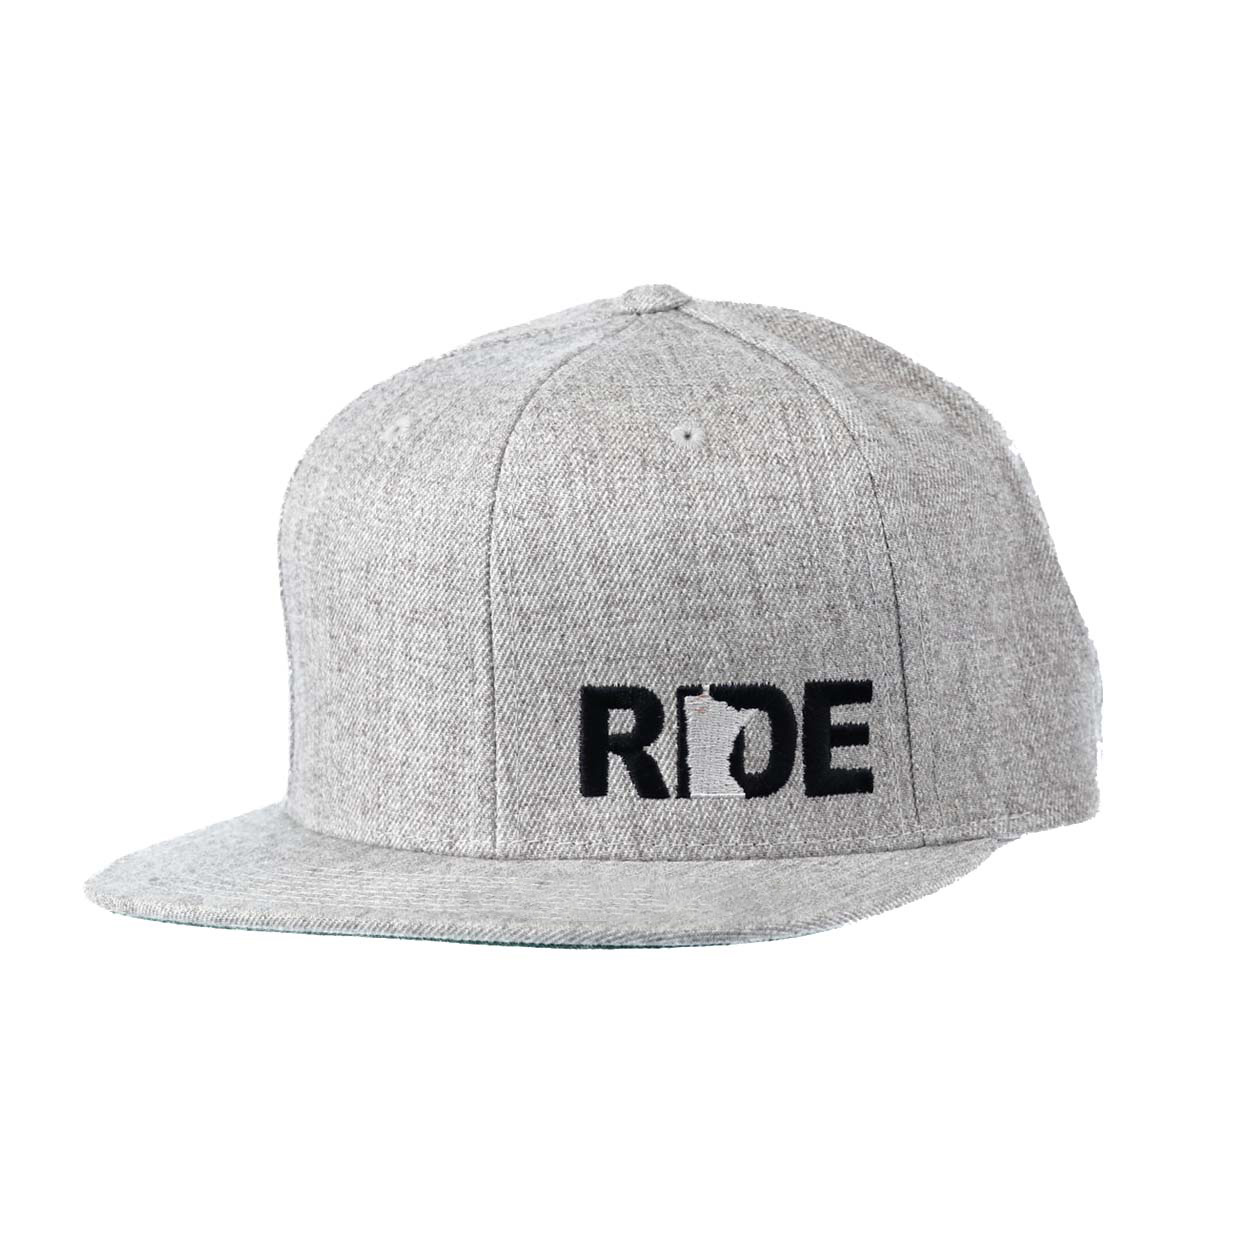 Ride Minnesota Night Out Pro Embroidered Snapback Flat Brim Hat Gray